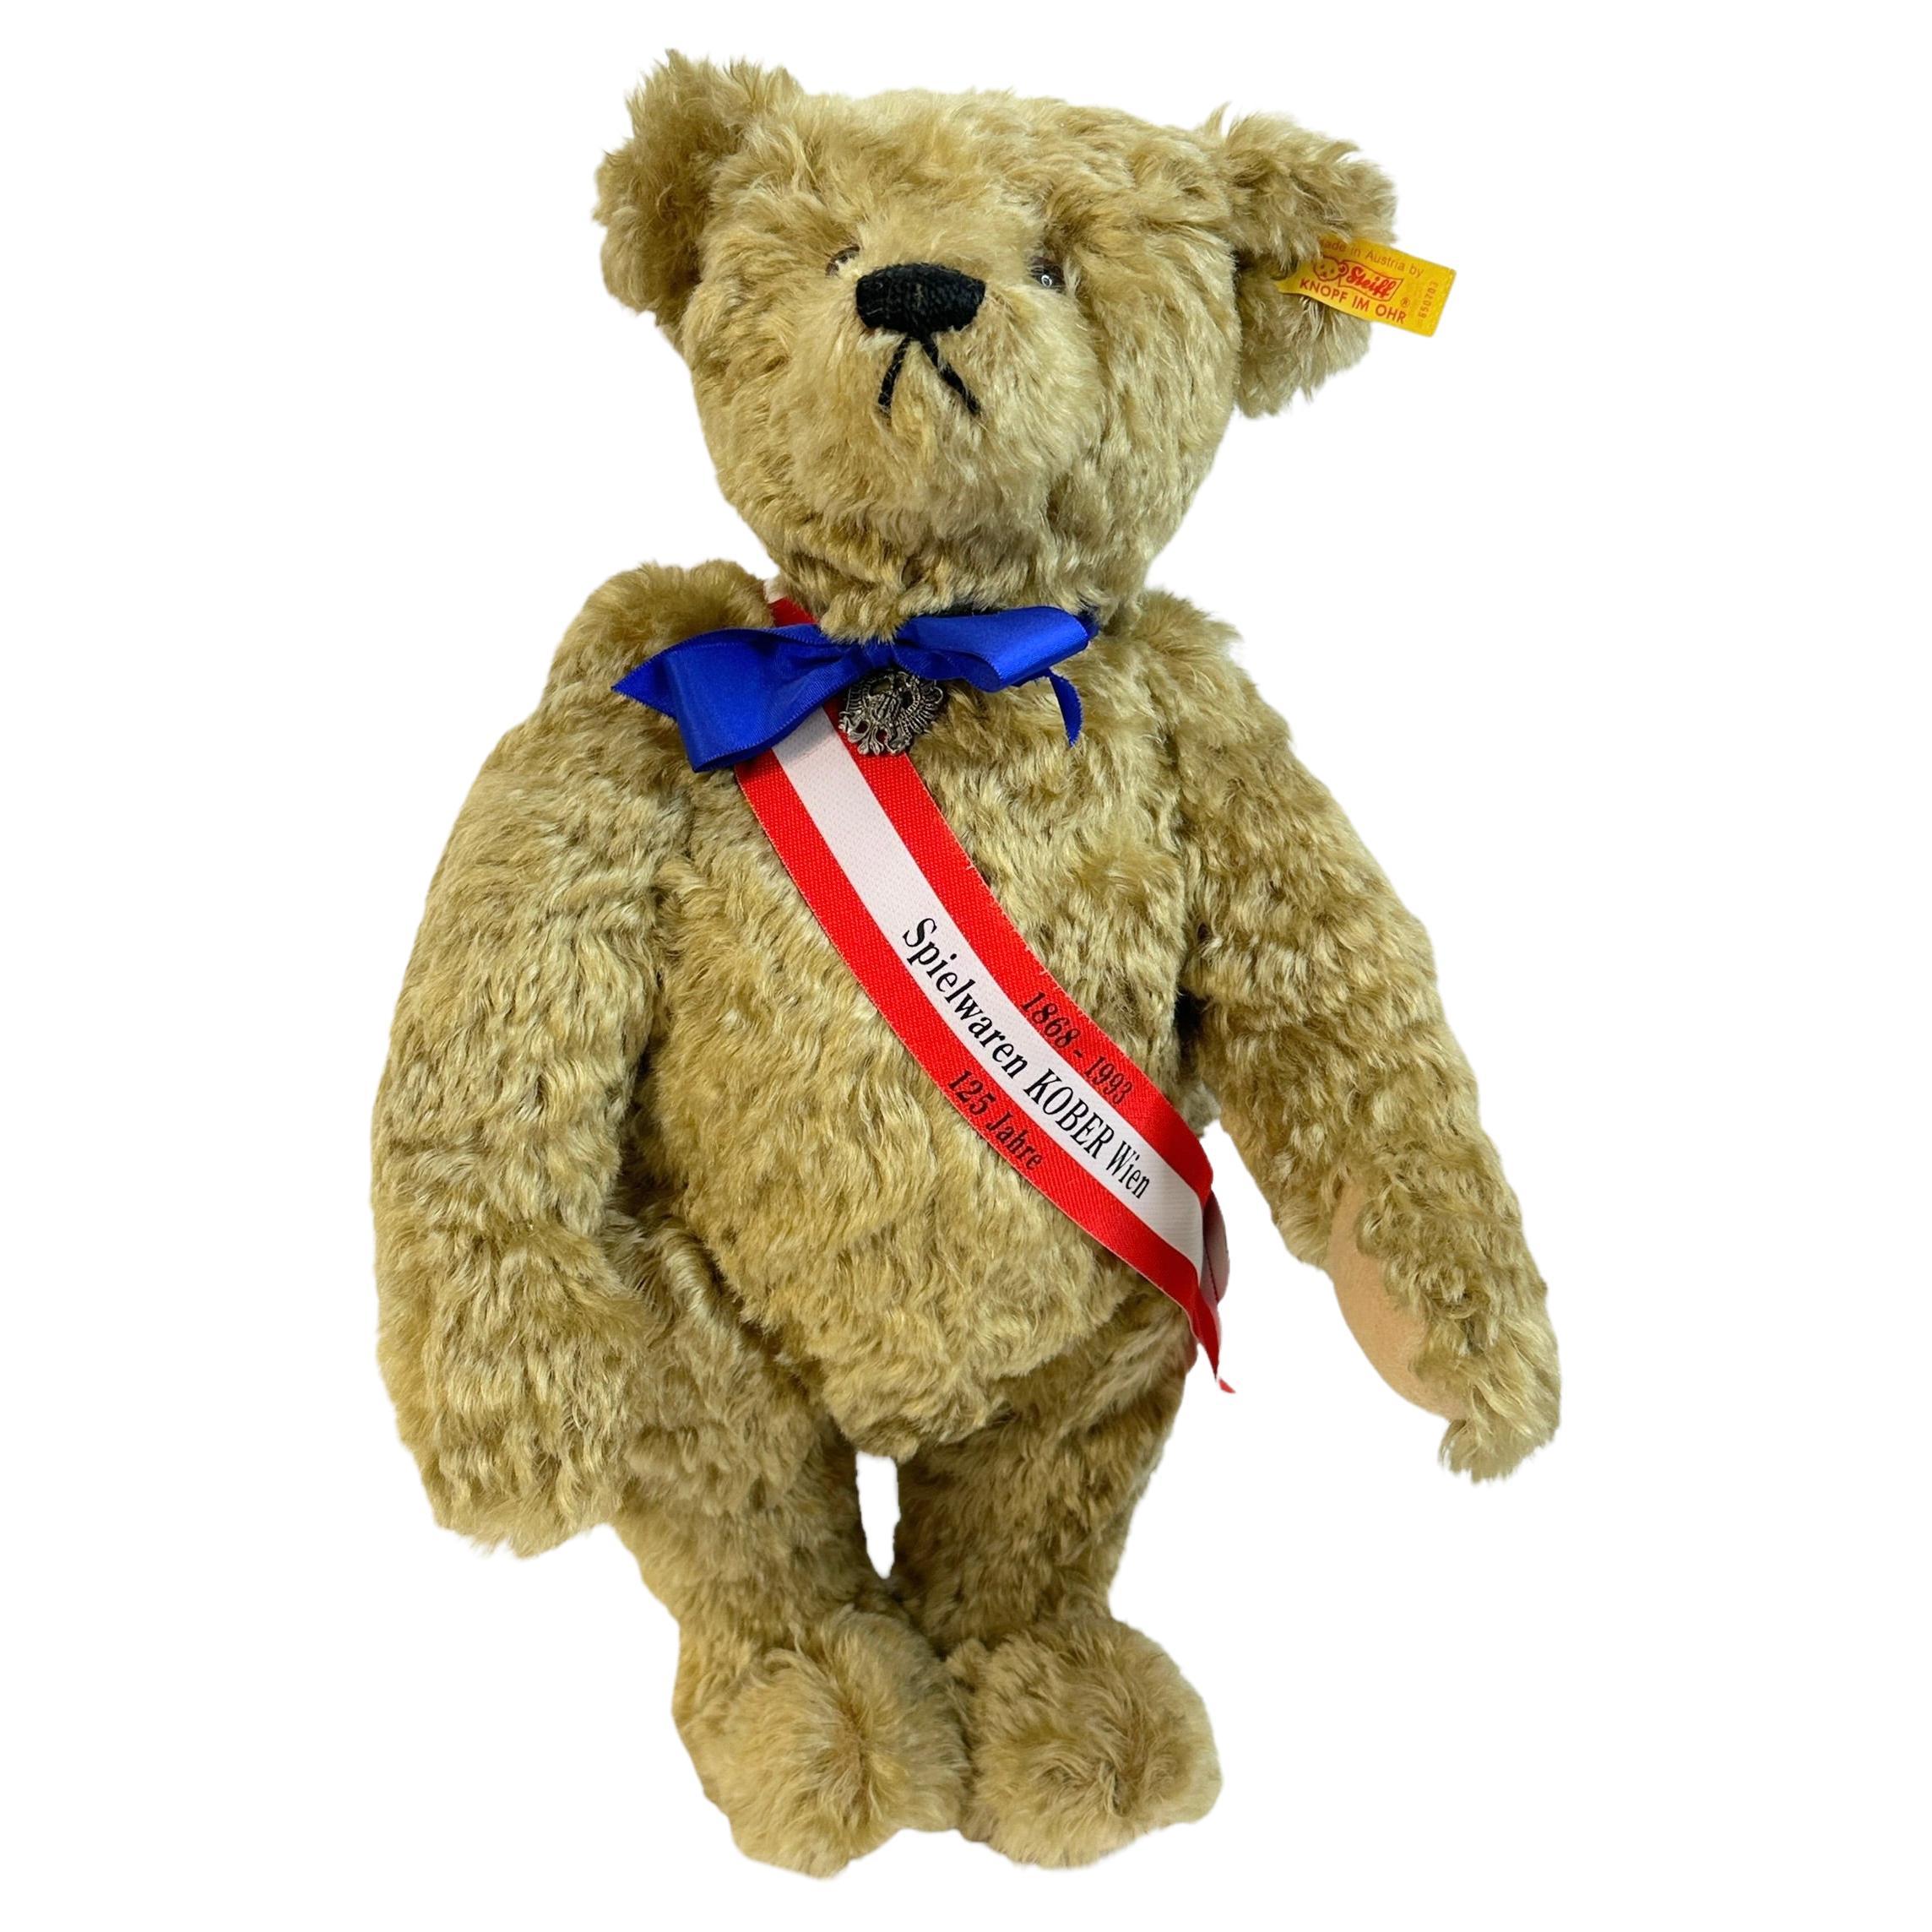 Steiff Collectible Teddy Bear Toy Store Kober Vienna exclusive, Vintage Austria